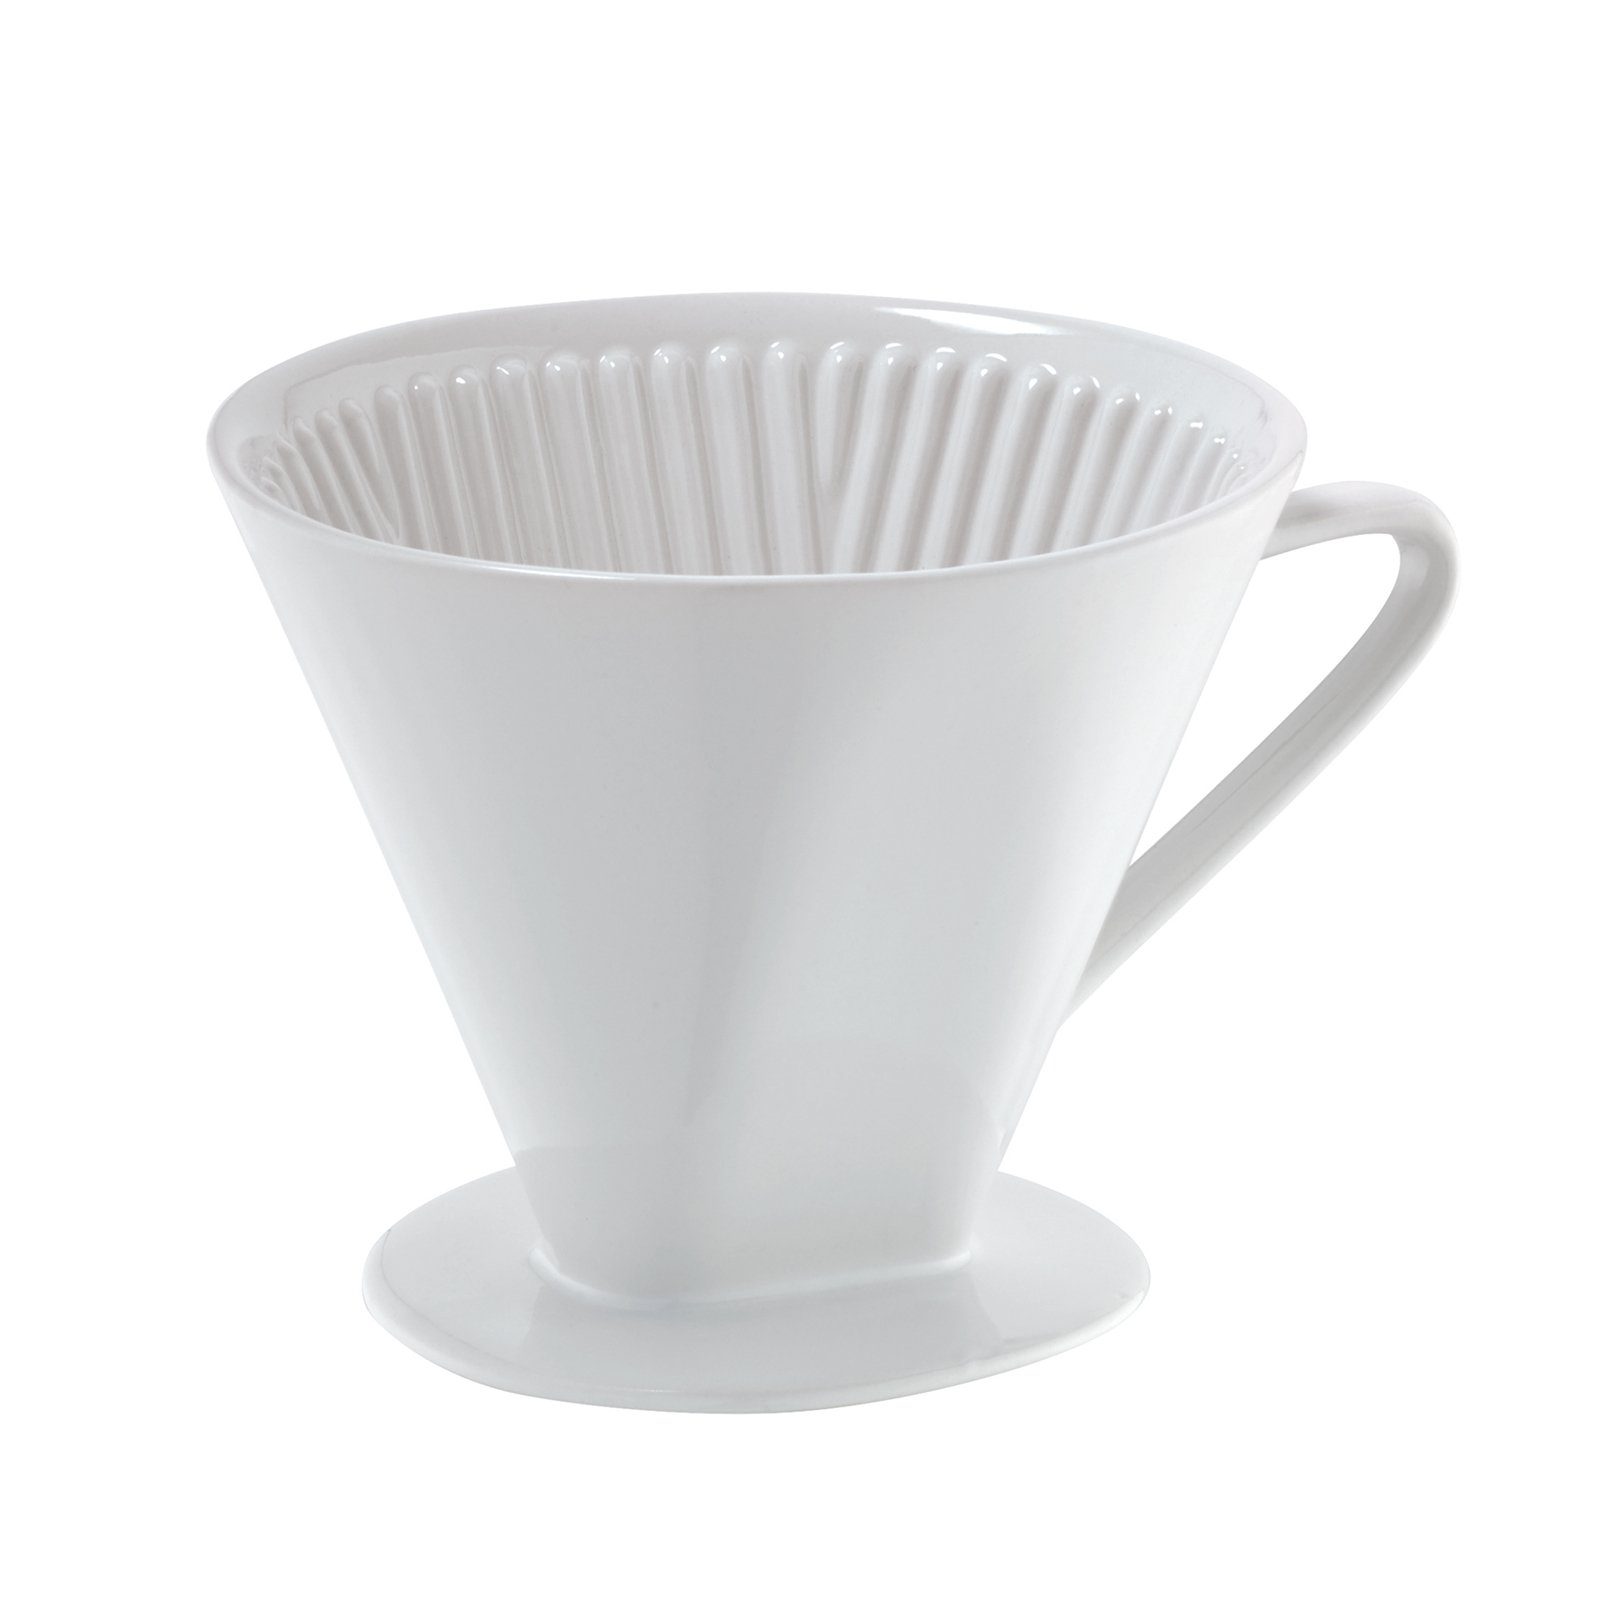 Porzellan Kaffeefilter online kaufen | OTTO